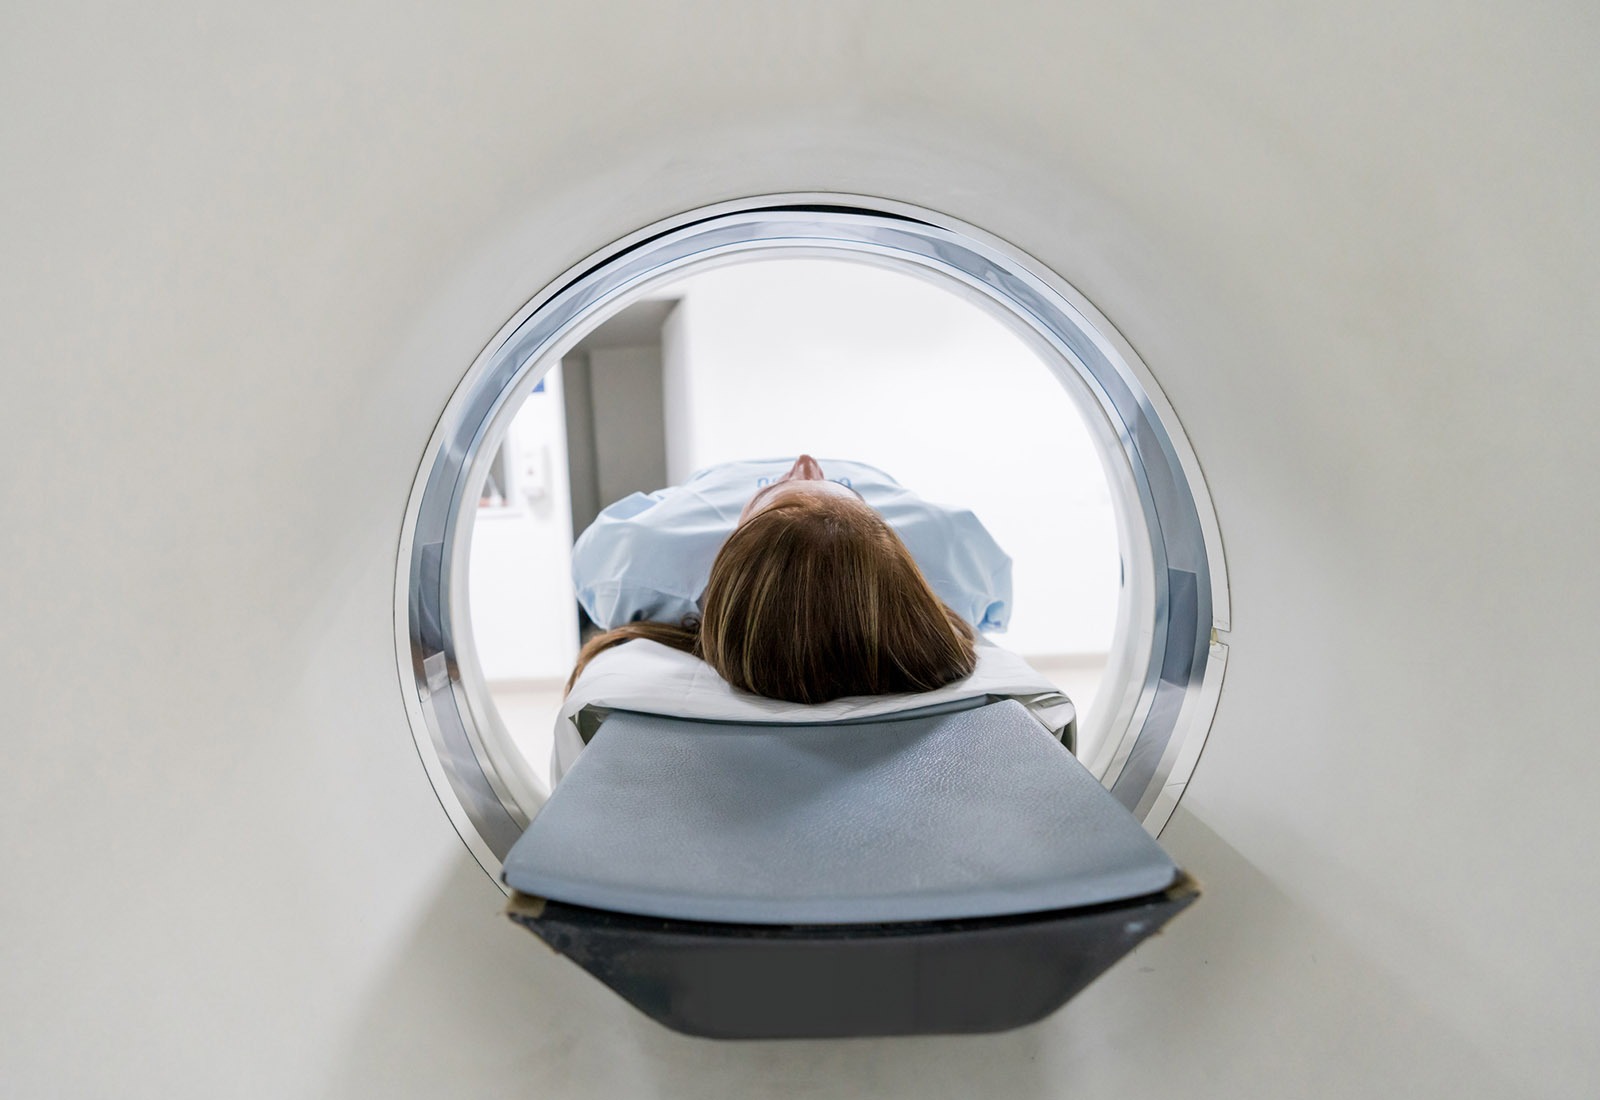 Kegunaan MRI untuk Diagnosis Penyakit Jantung